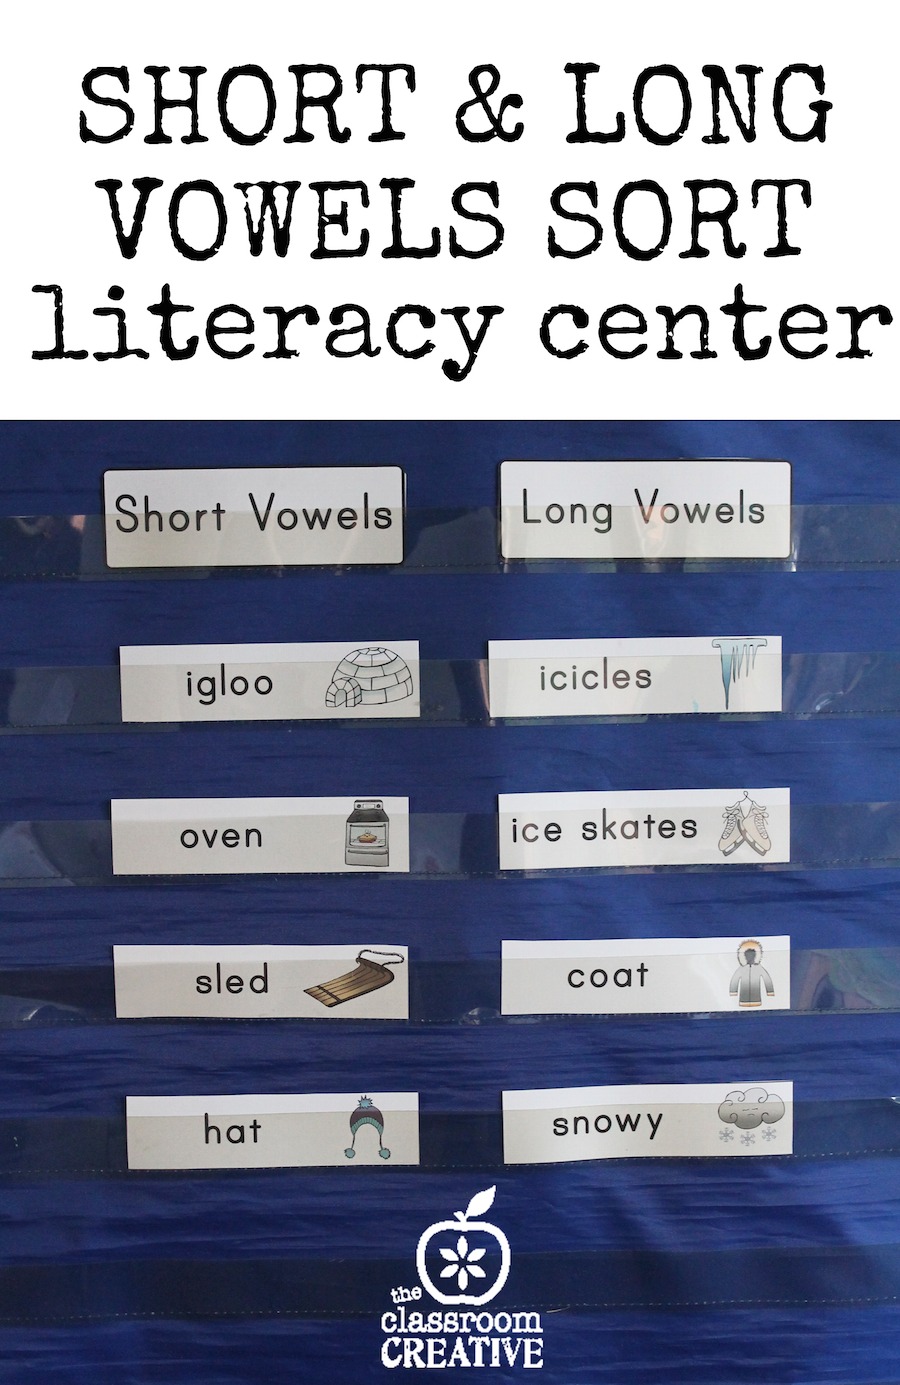 short and long vowel sort literacy center